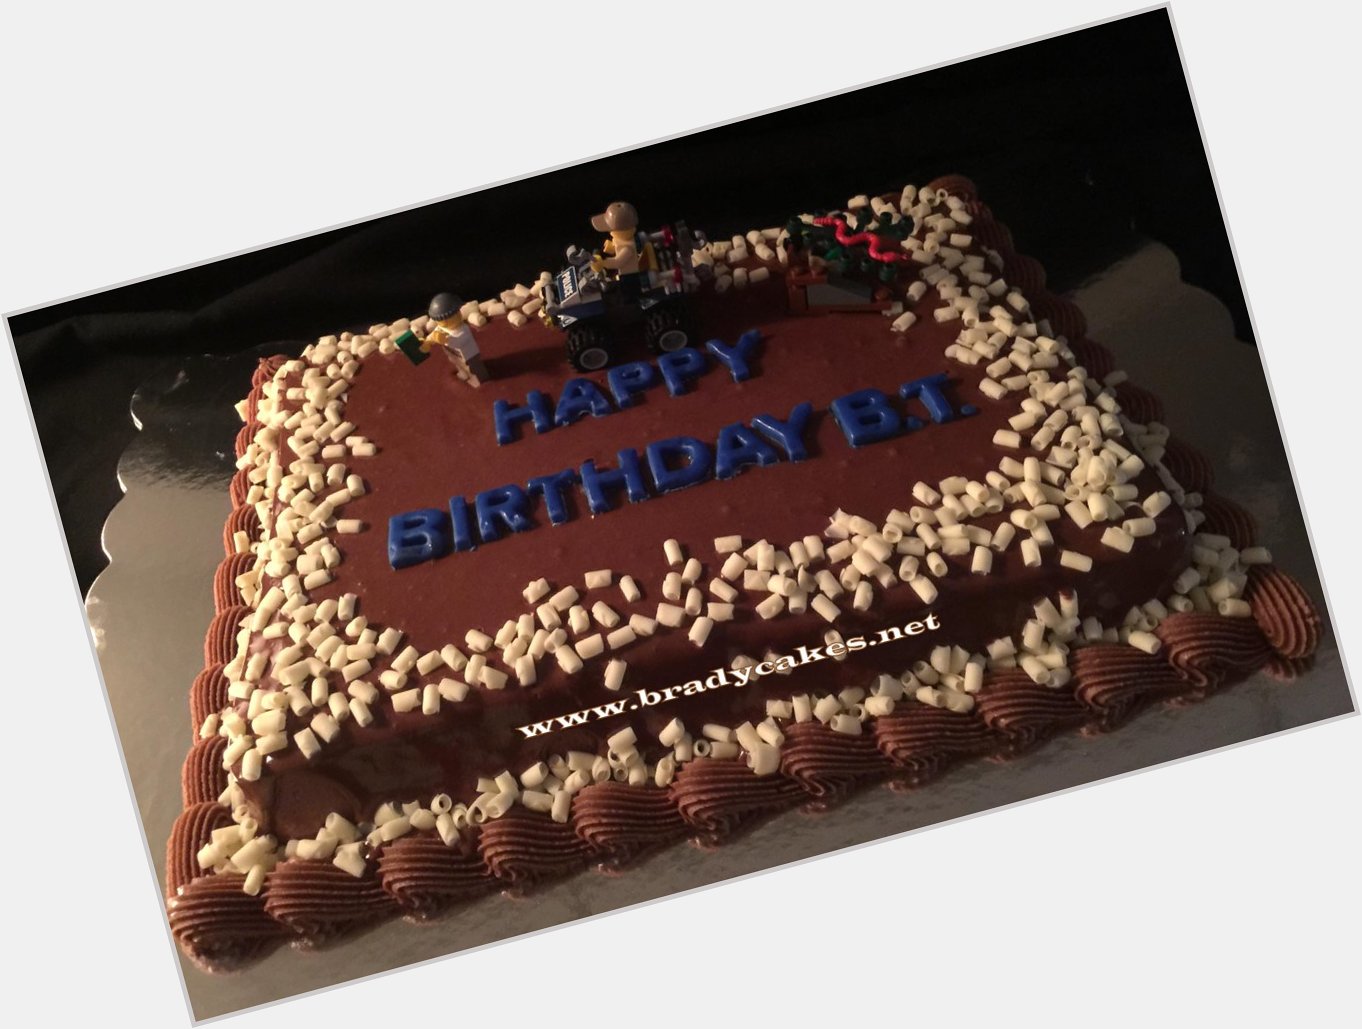 Chocolate on Chocolate Ganache with White Chocolate Curls
\"Happy Birthday \Lil B.T.\" - Lego Movie Theme
Brady Cakes 